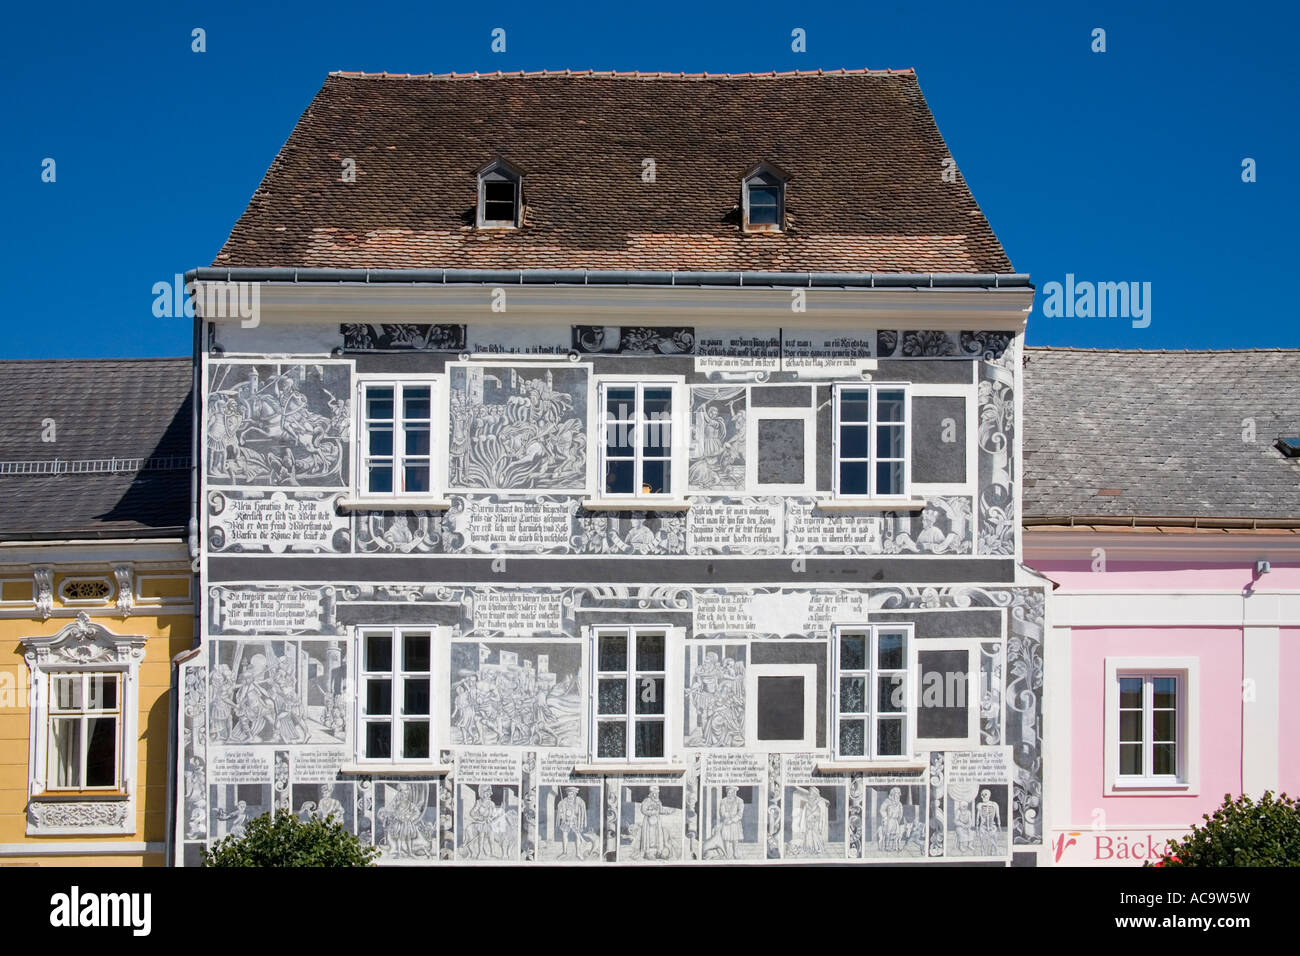 Sgraffito house in Weitra, Waldviertel Region, Lower Austria, Austria Stock Photo